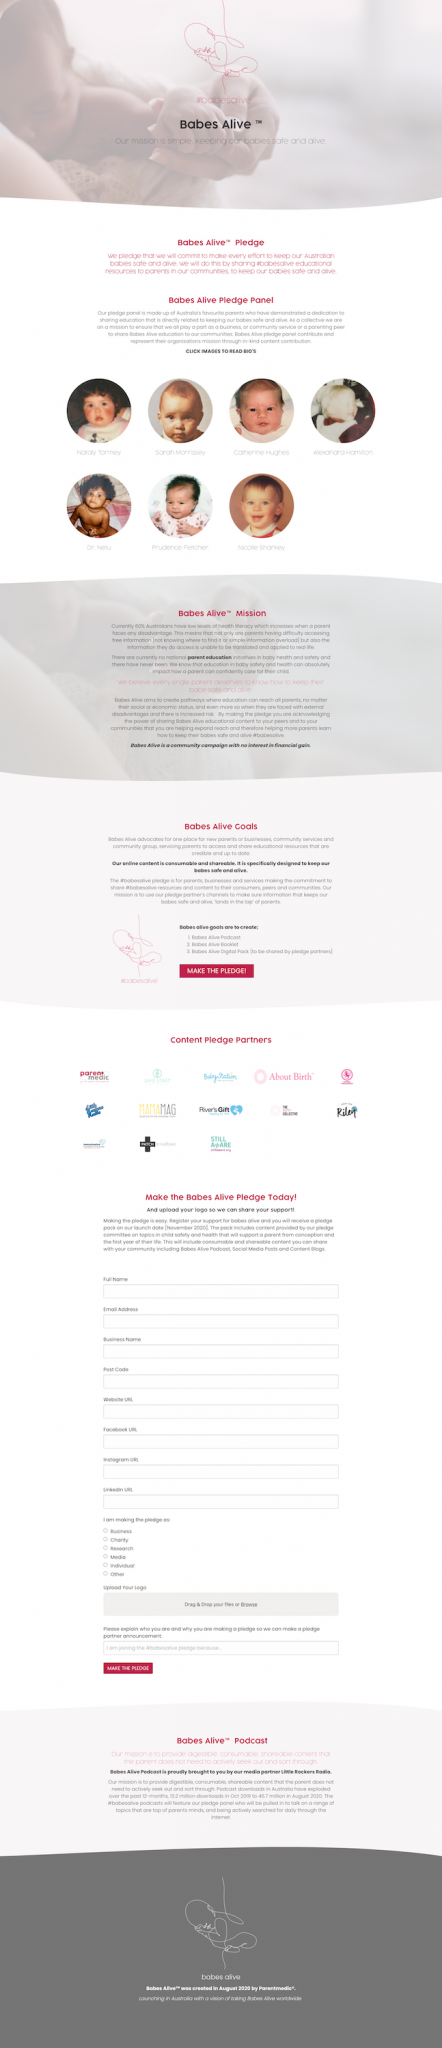 babesalive pledge website design